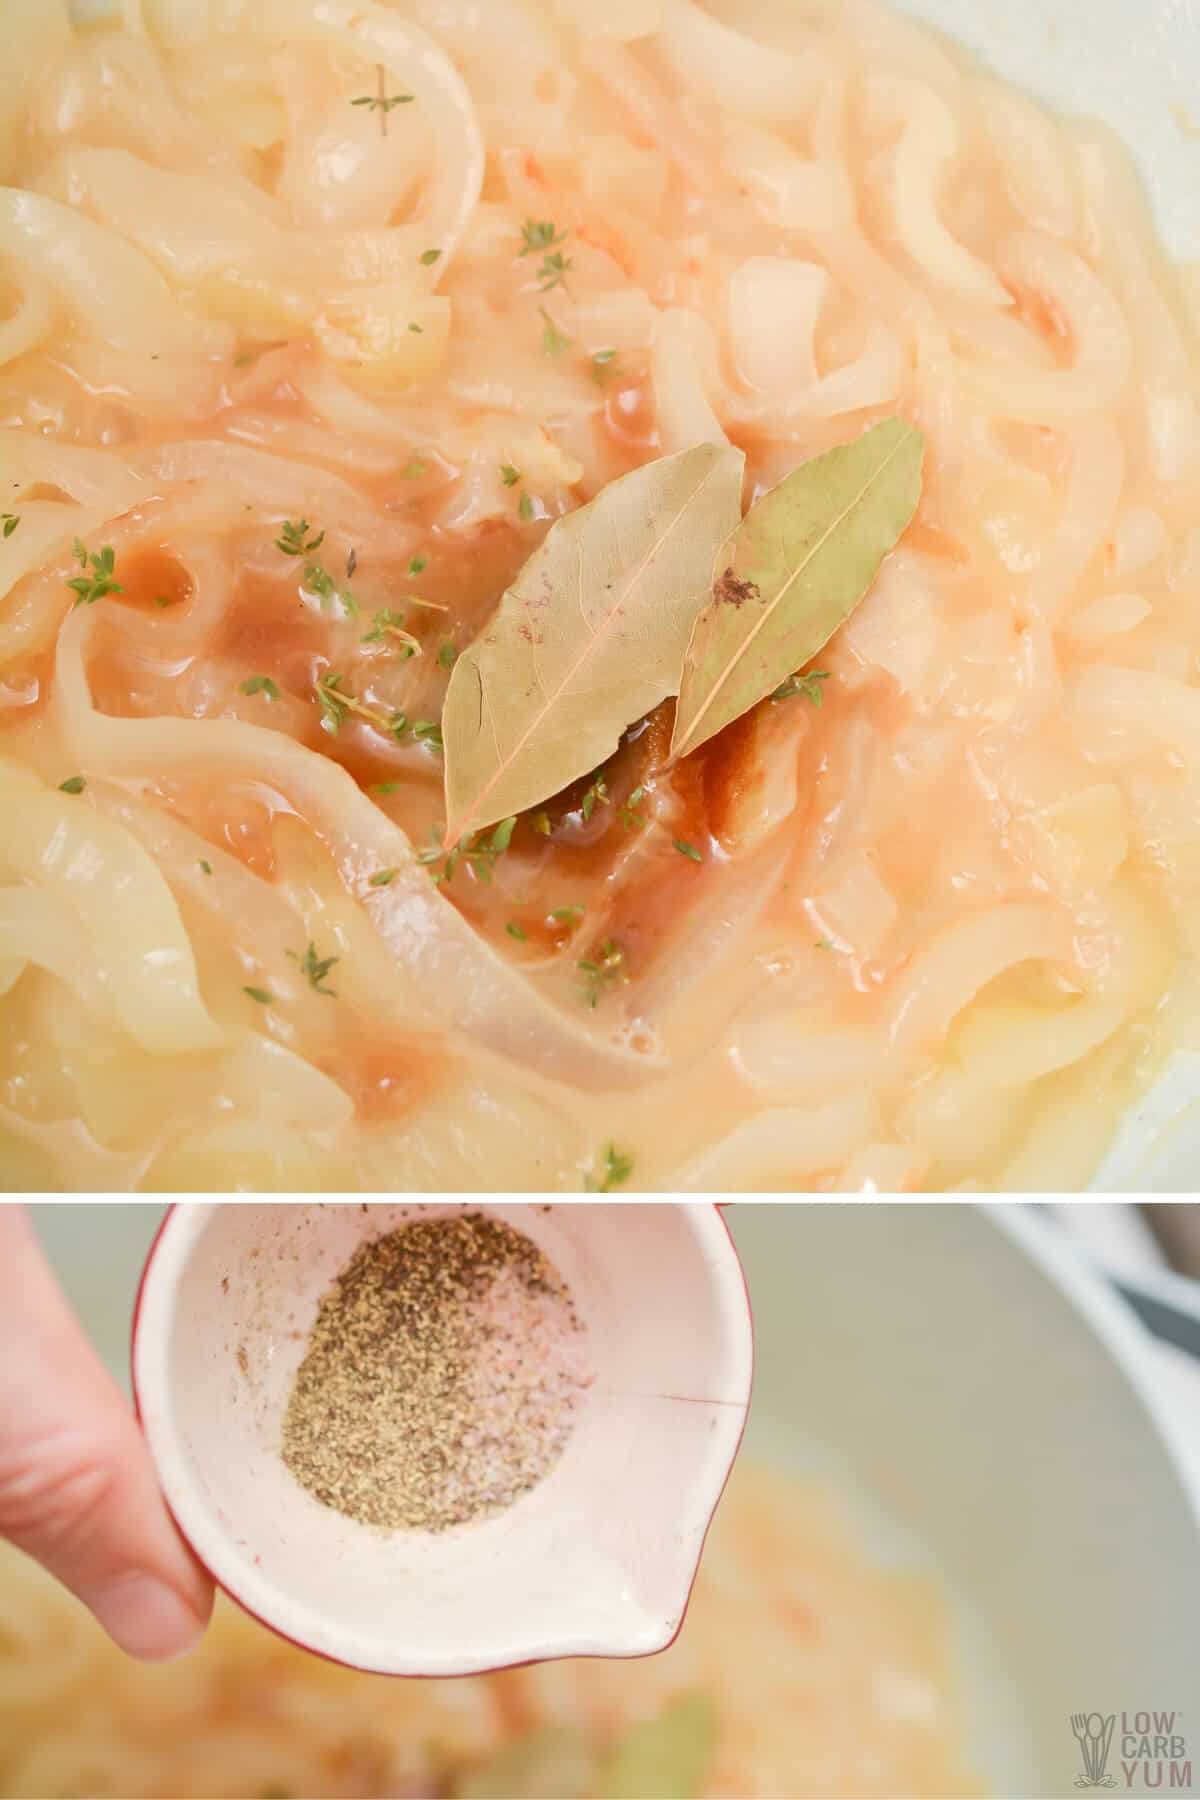 seasoning the onion soup